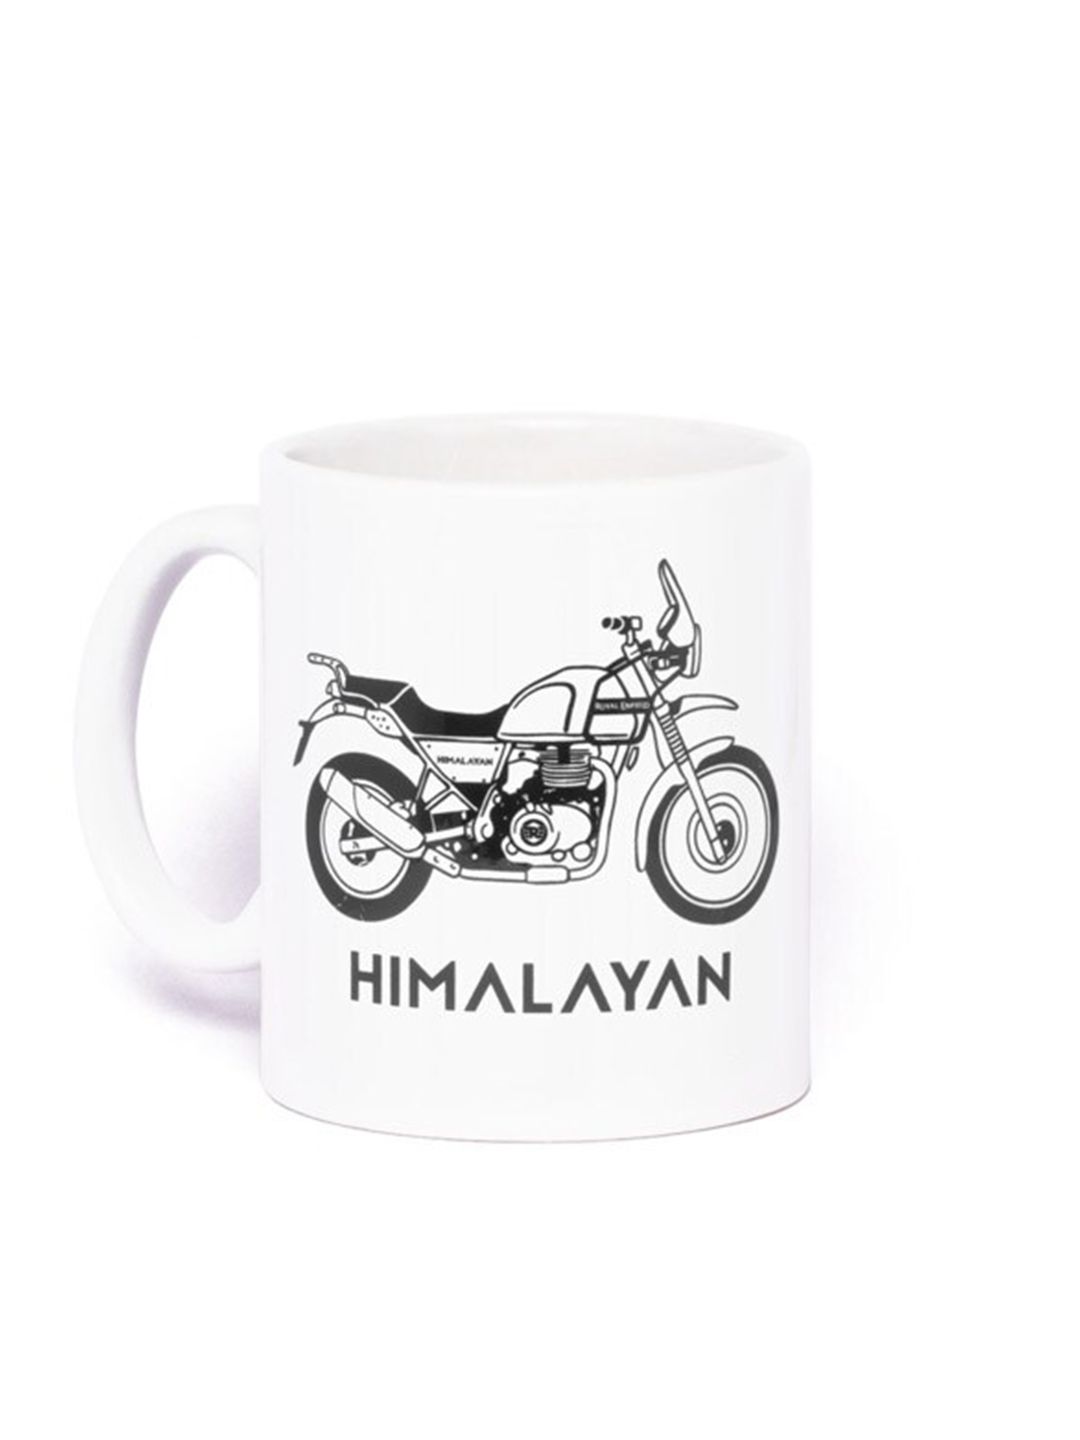 Royal Enfield White & Black Himalayan Bike Printed Ceramic Glossy Mug - 200ml Price in India